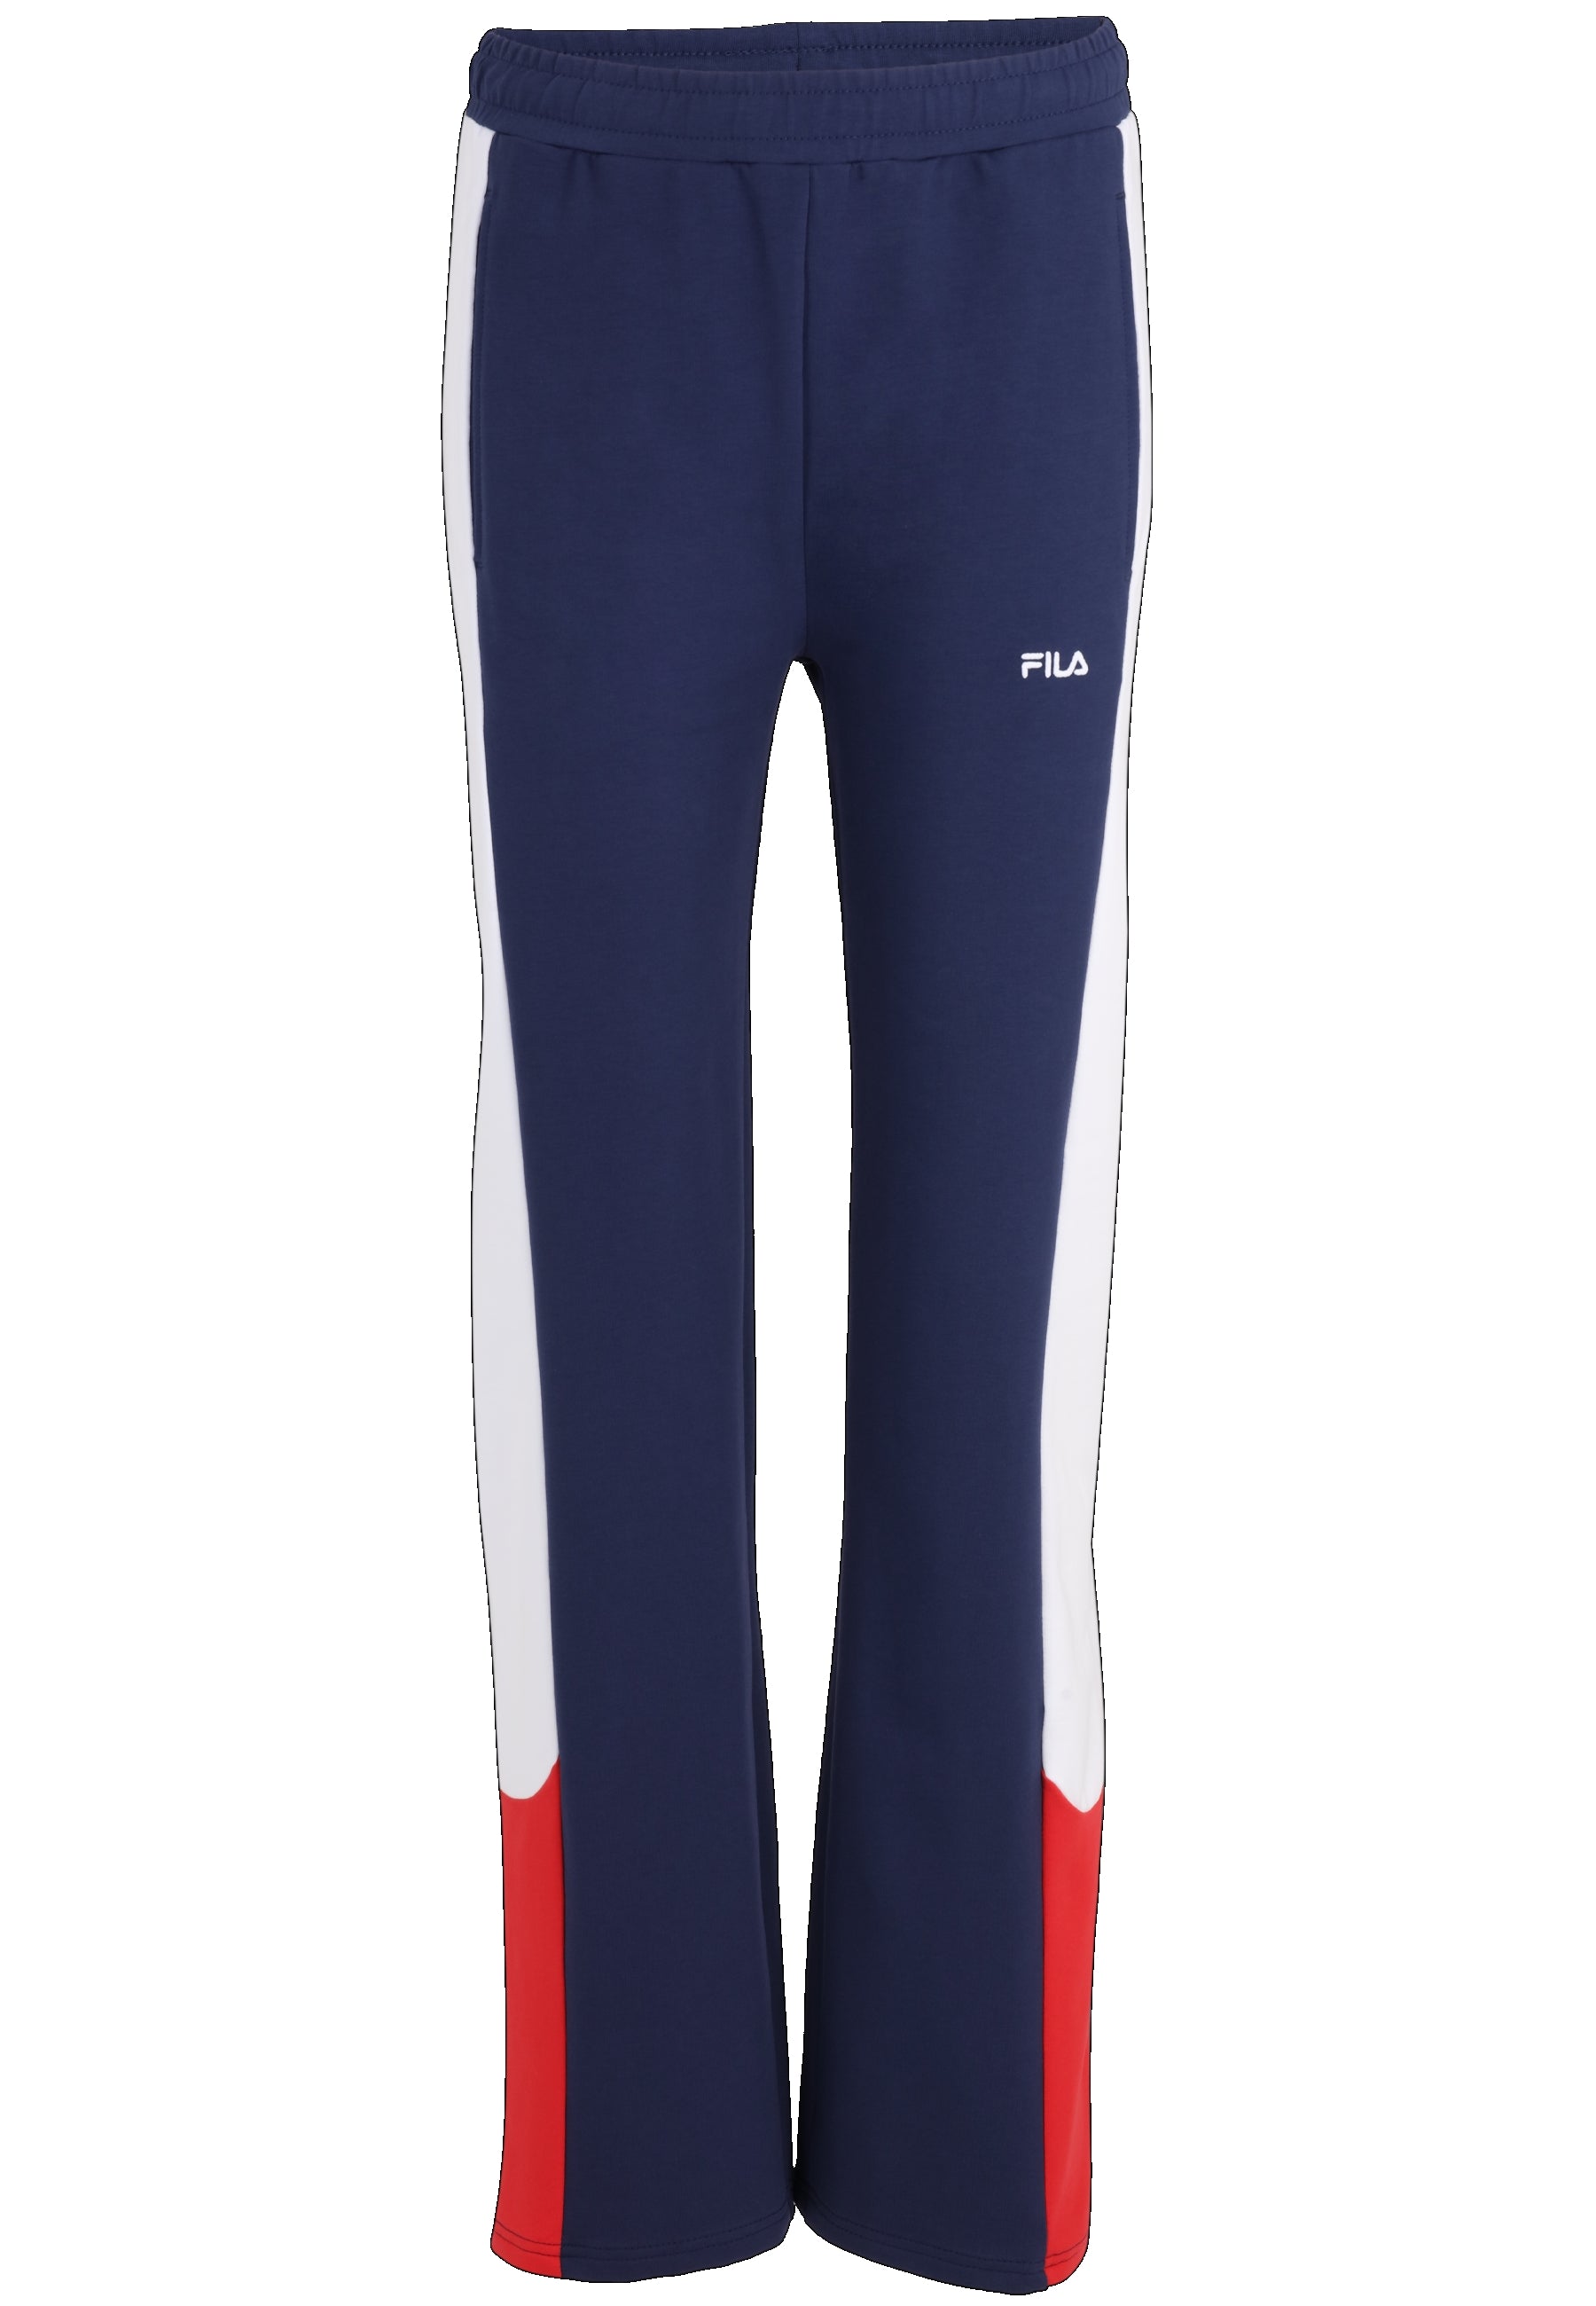 Bellegarde Track Pants in Medieval Blue-Bright White-True Red Jogginghosen Fila   